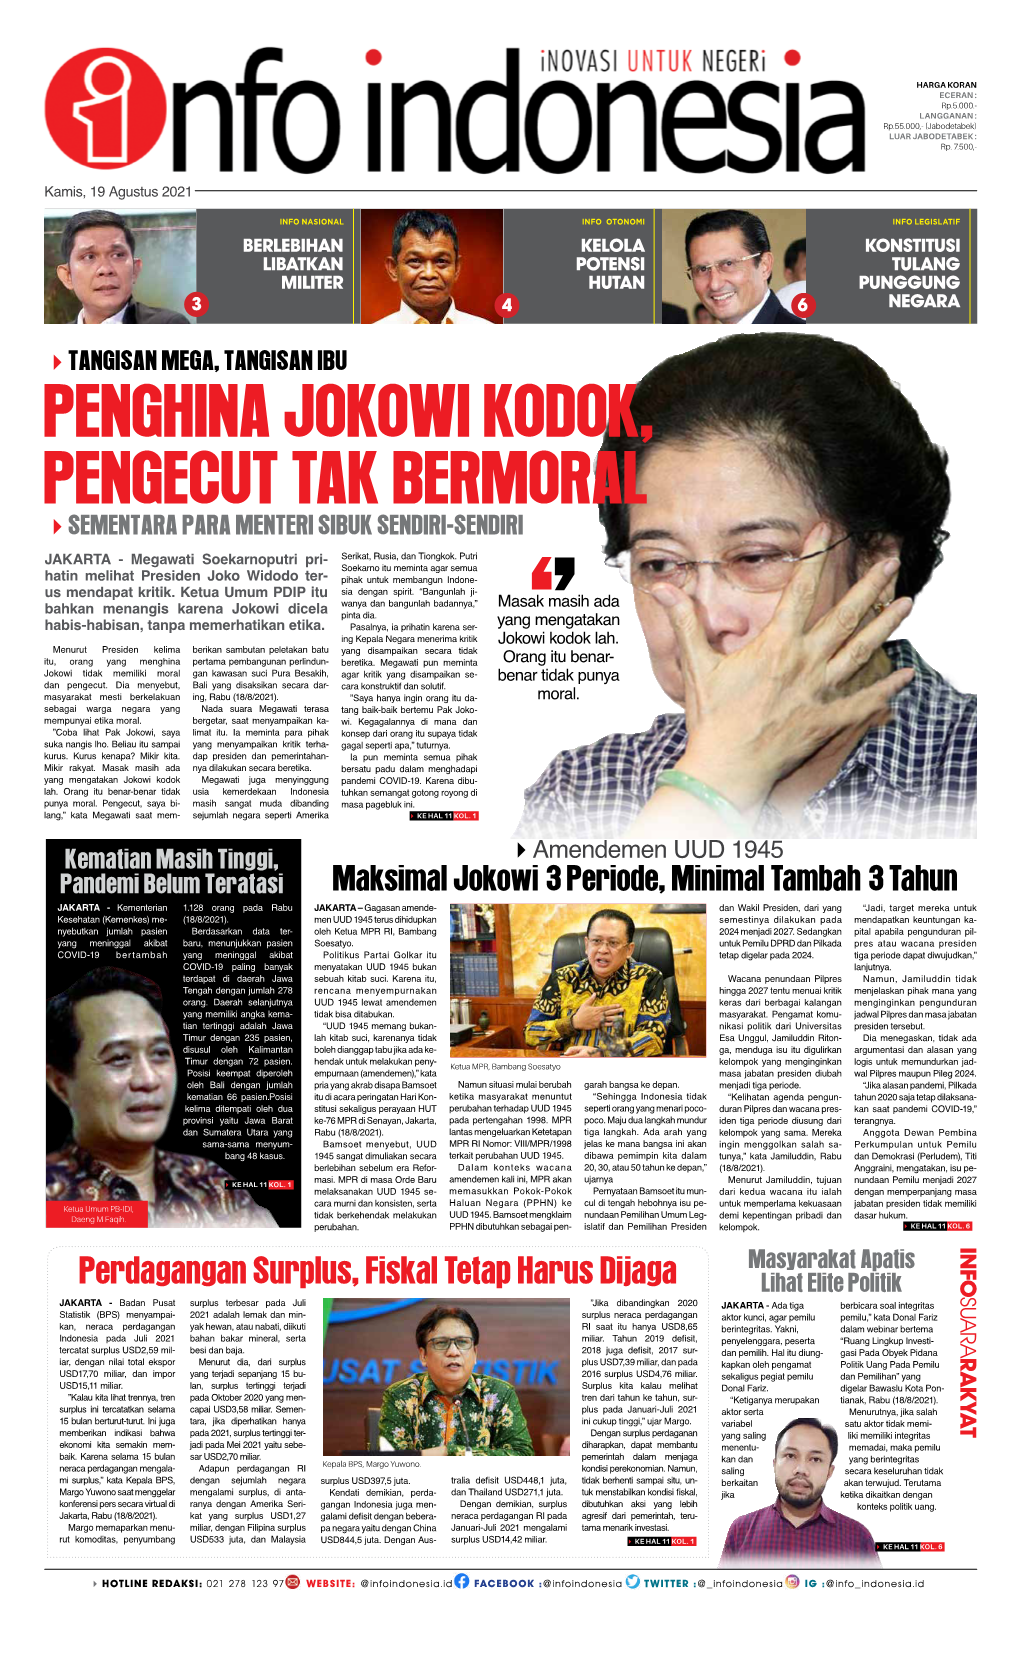 Penghina Jokowi Kodok, Pengecut Tak Bermoral 4Sementara Para Menteri Sibuk Sendiri-Sendiri